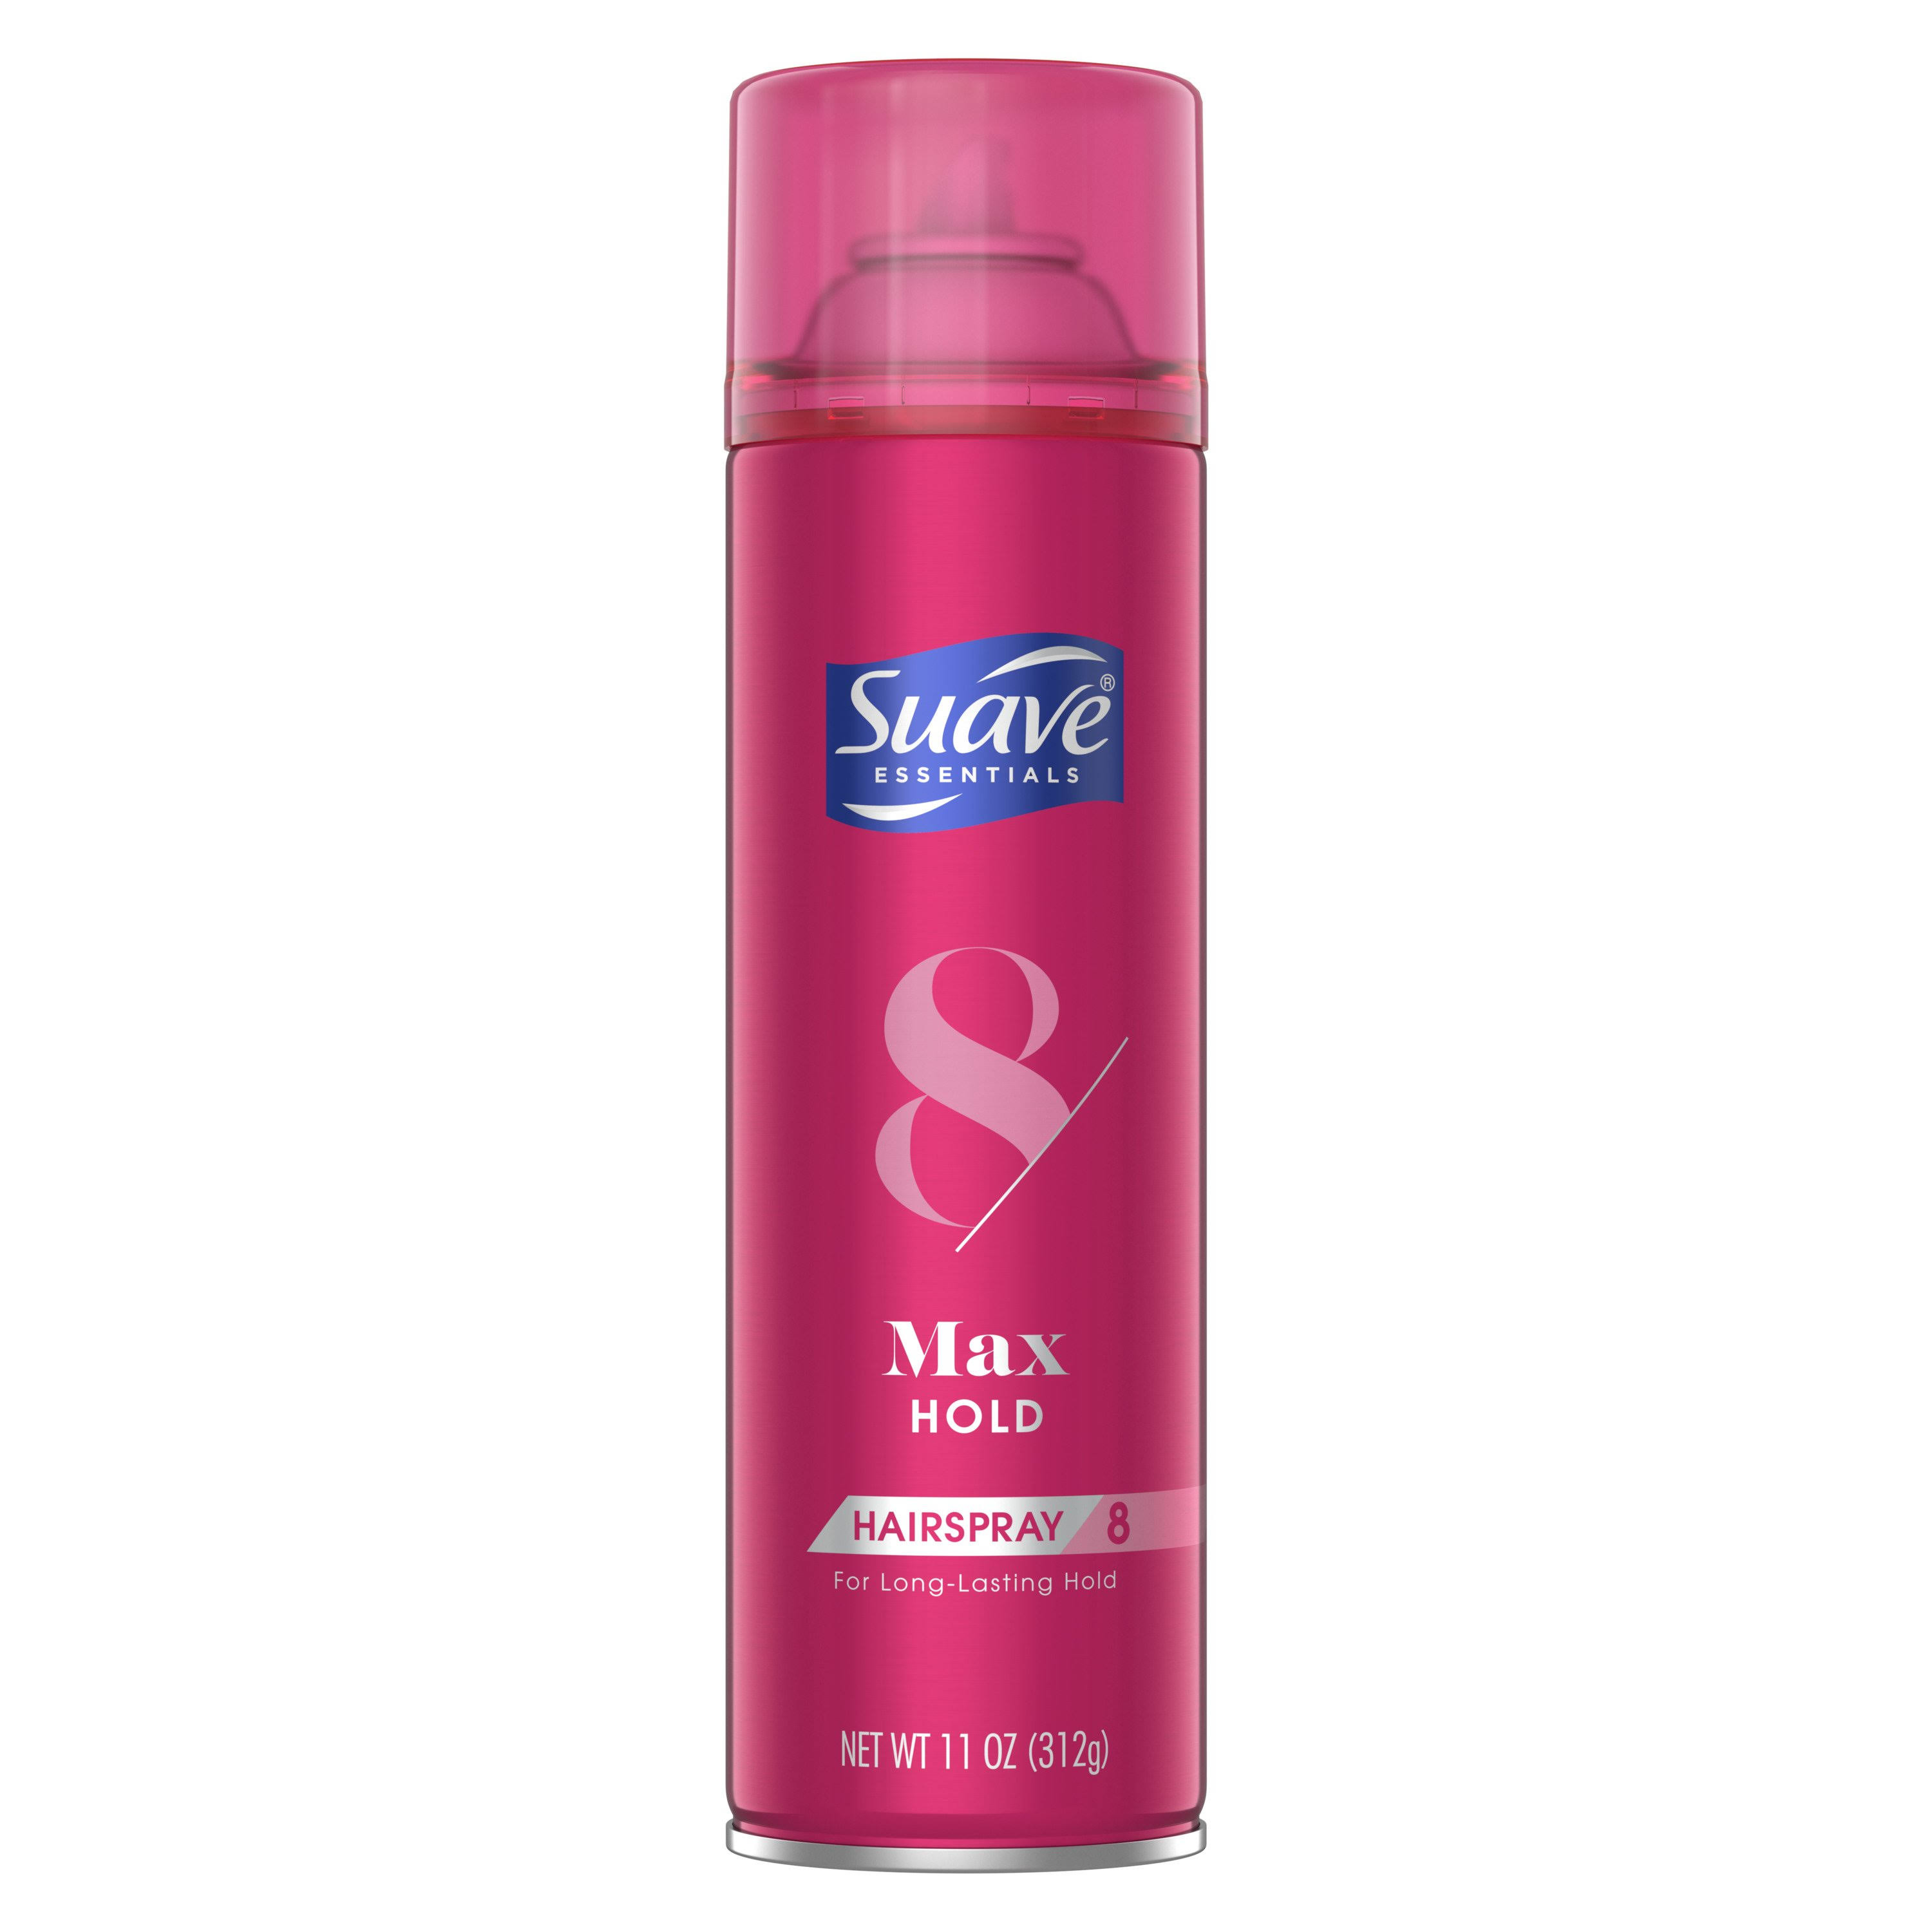 Suave Max Hold 8 Hairspray - 11oz